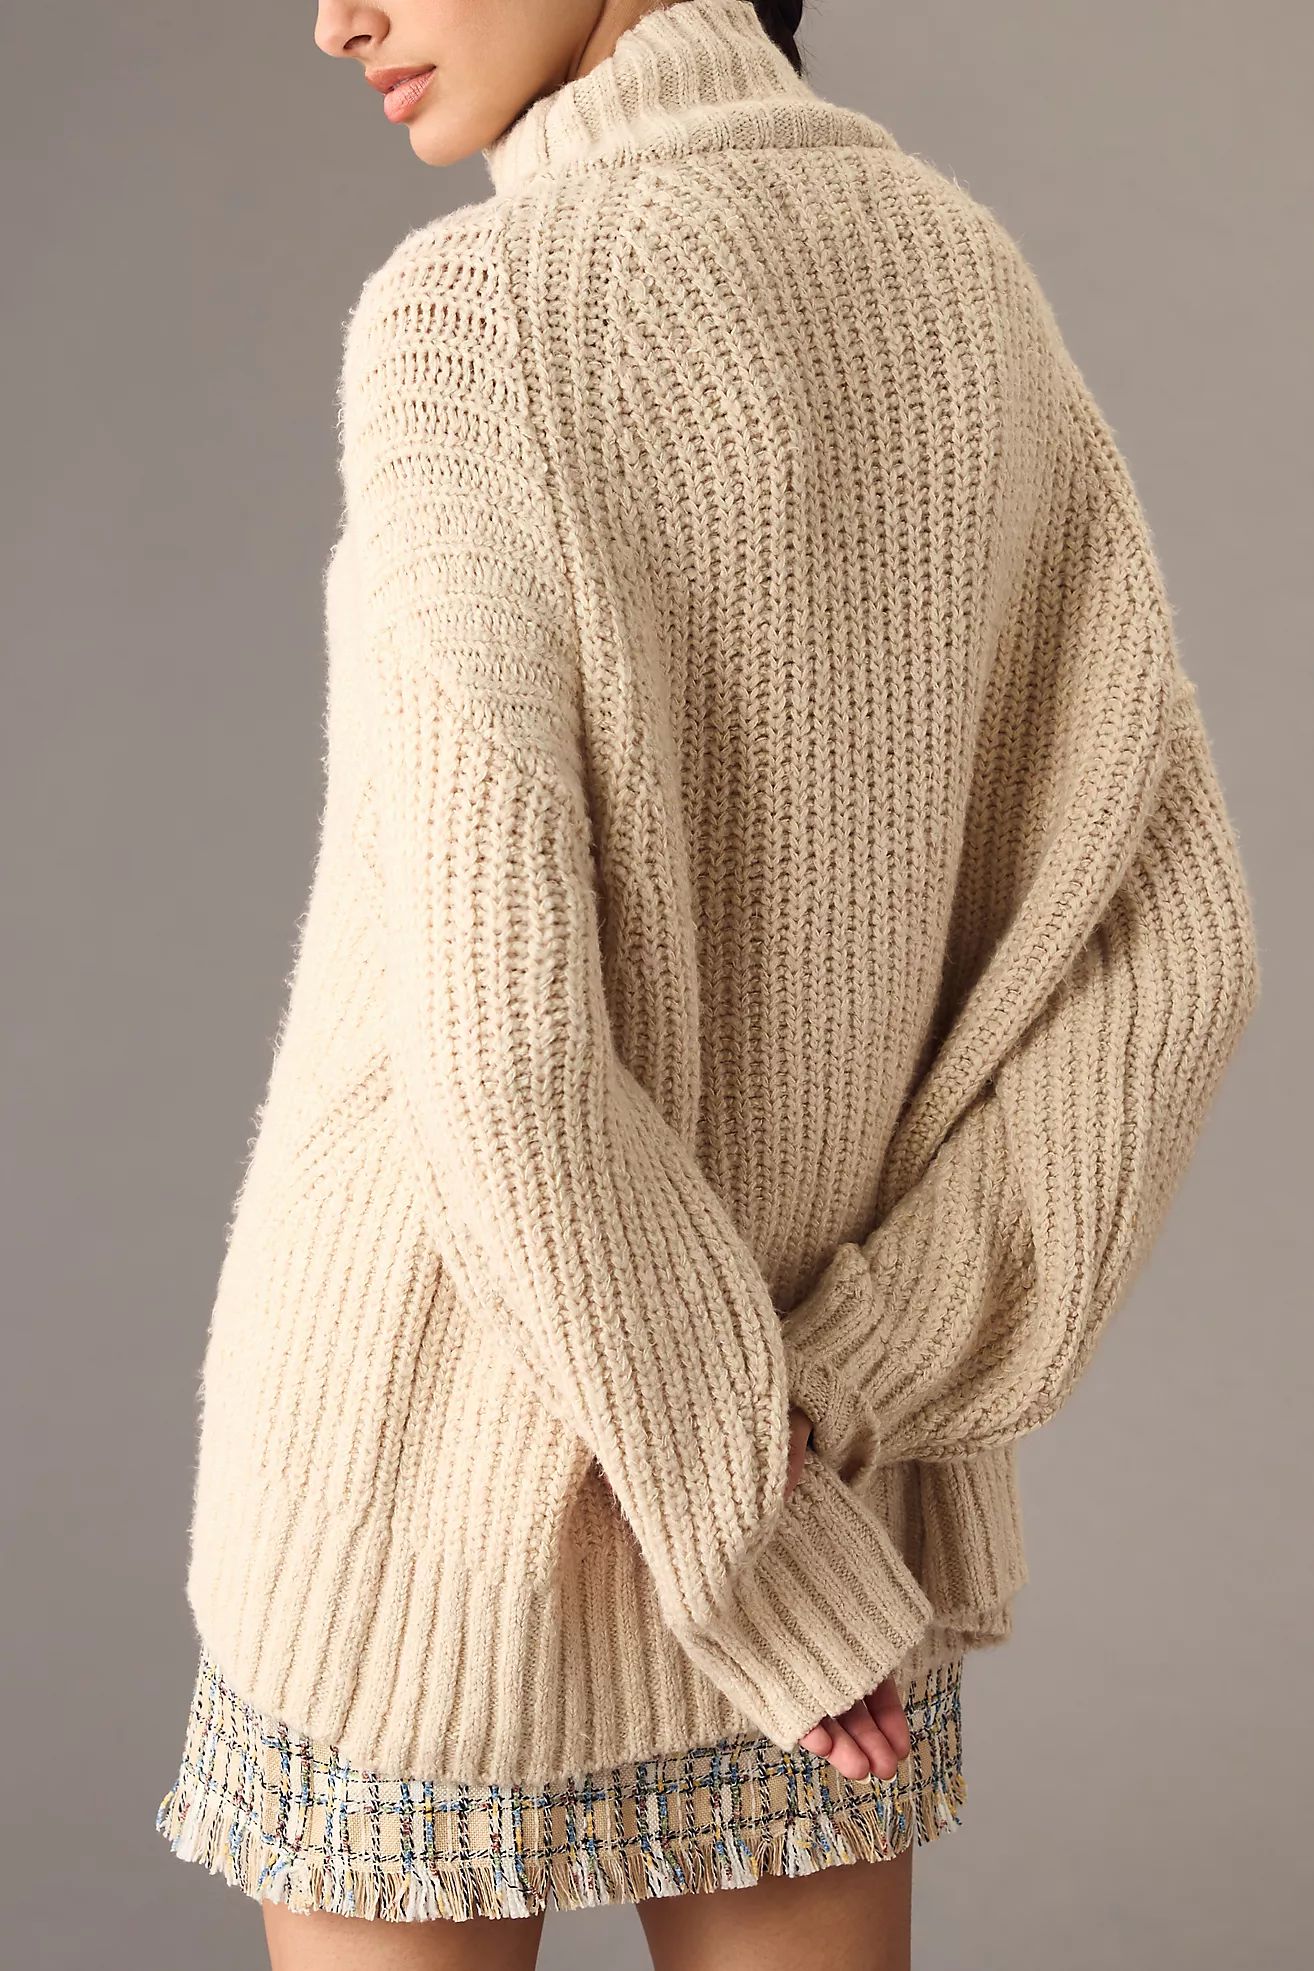 The Dakotah Oversized Turtleneck Sweater by Maeve | Anthropologie (US)